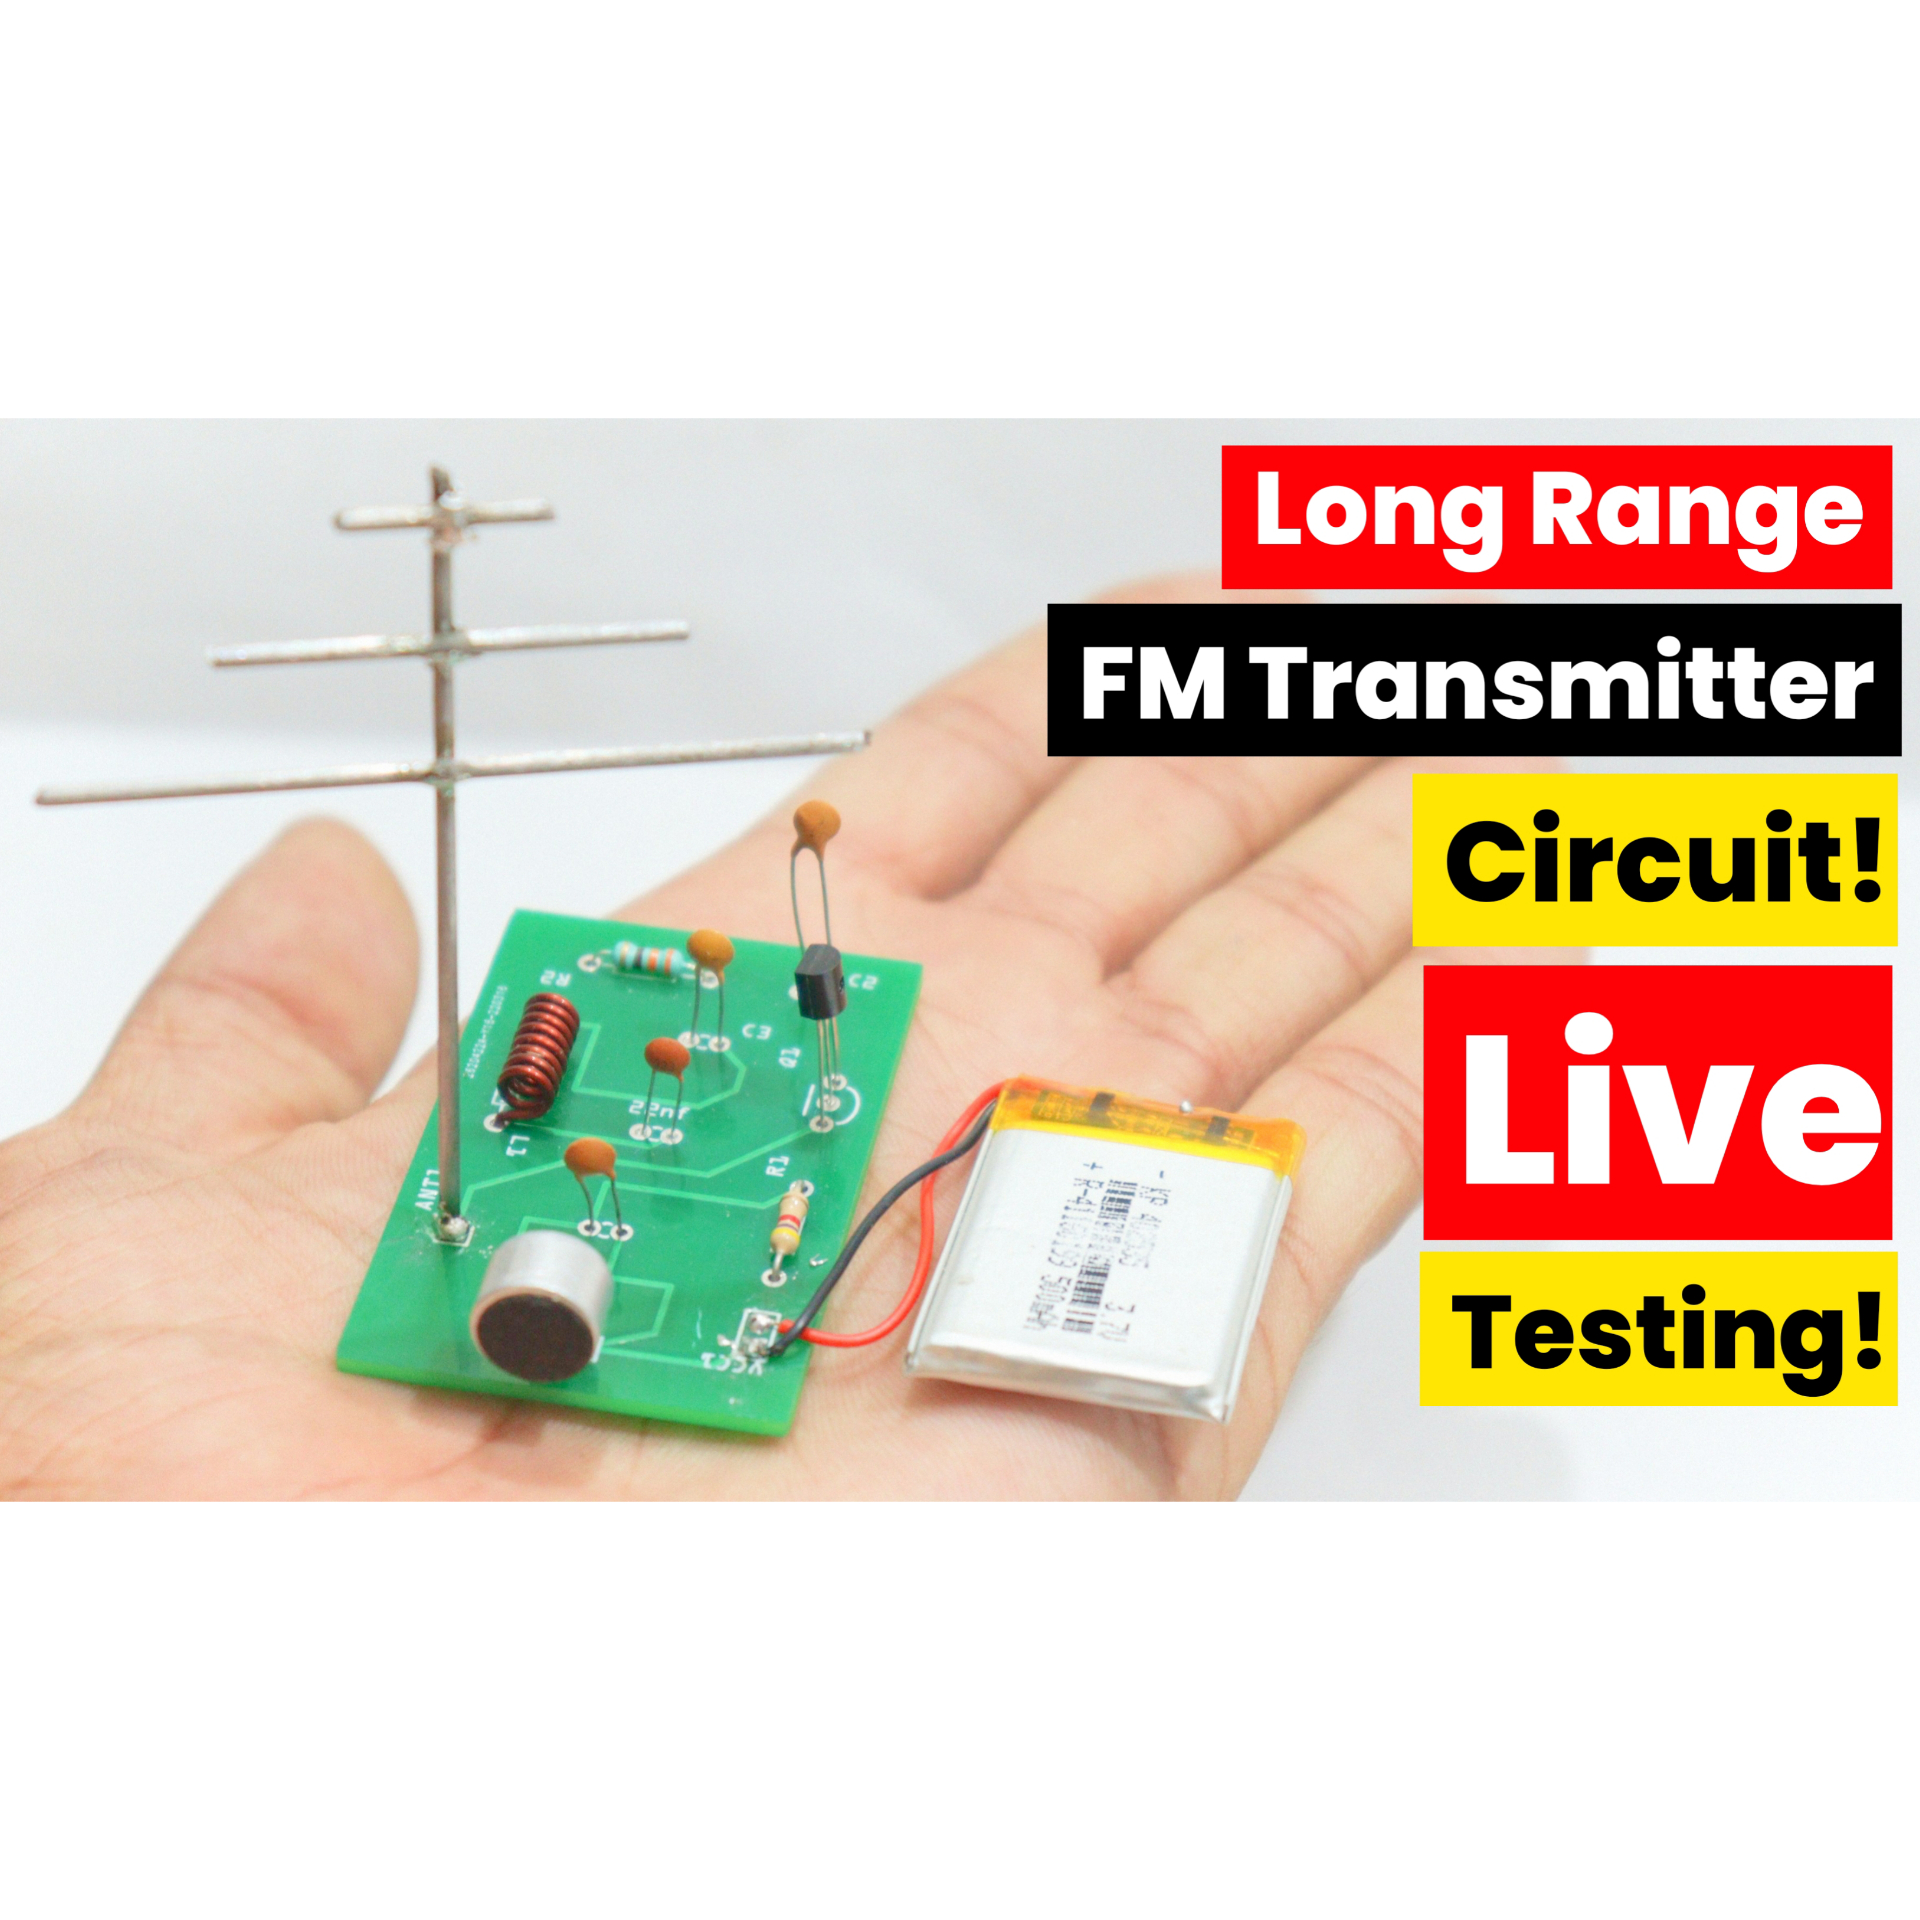 2Km Powerful FM Transmitter Circuit Digram.png